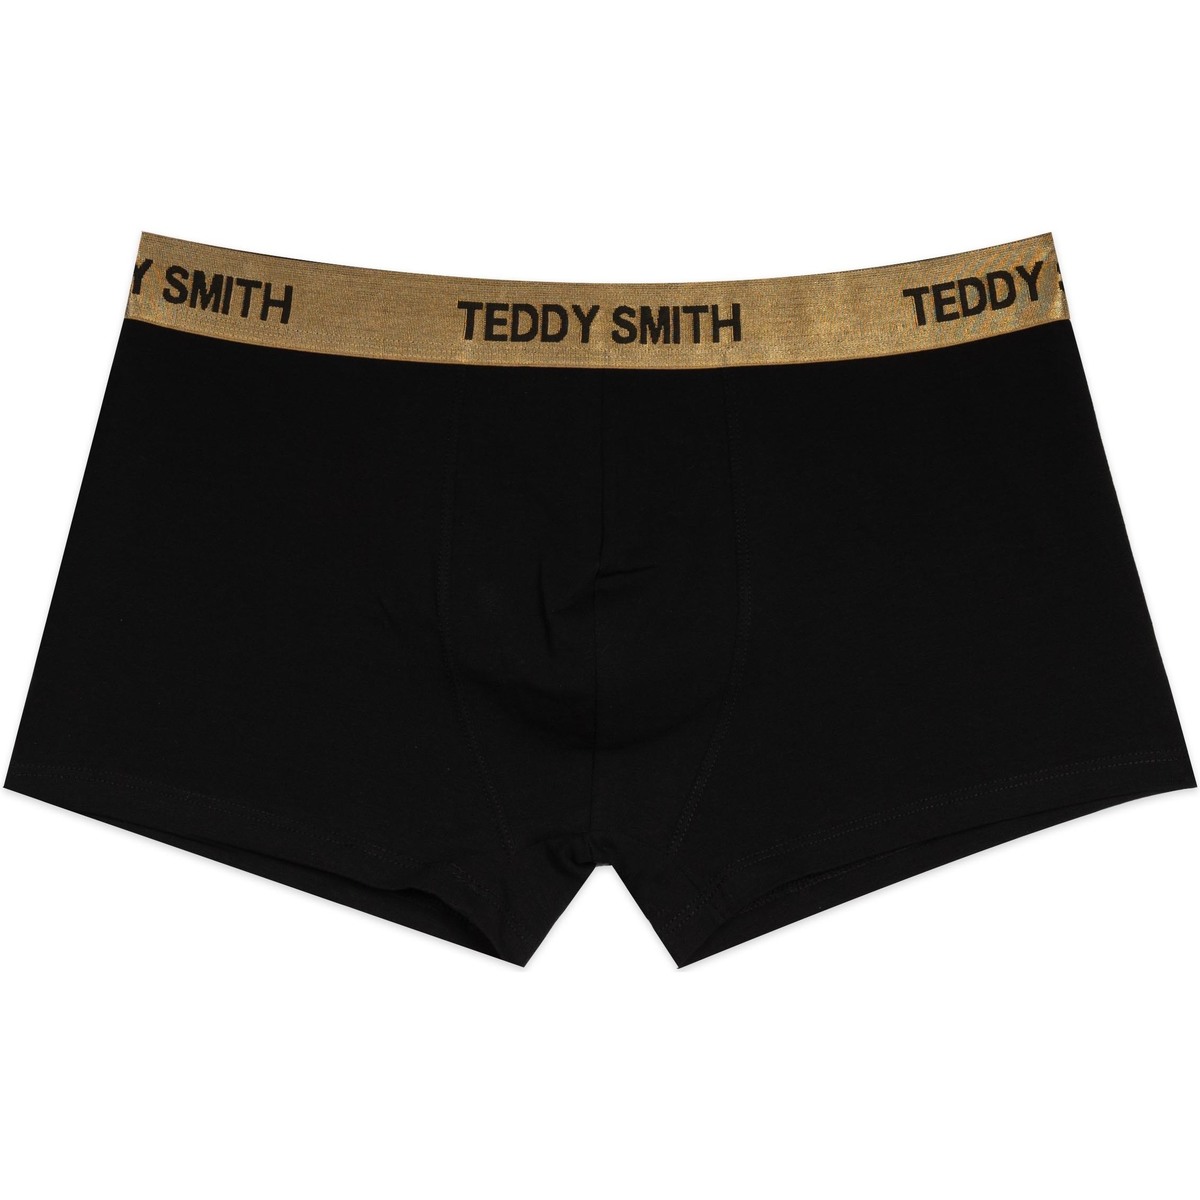 Teddy Smith Noir Slip style boxer - BILLYBOB GOLD 9jOYhmED